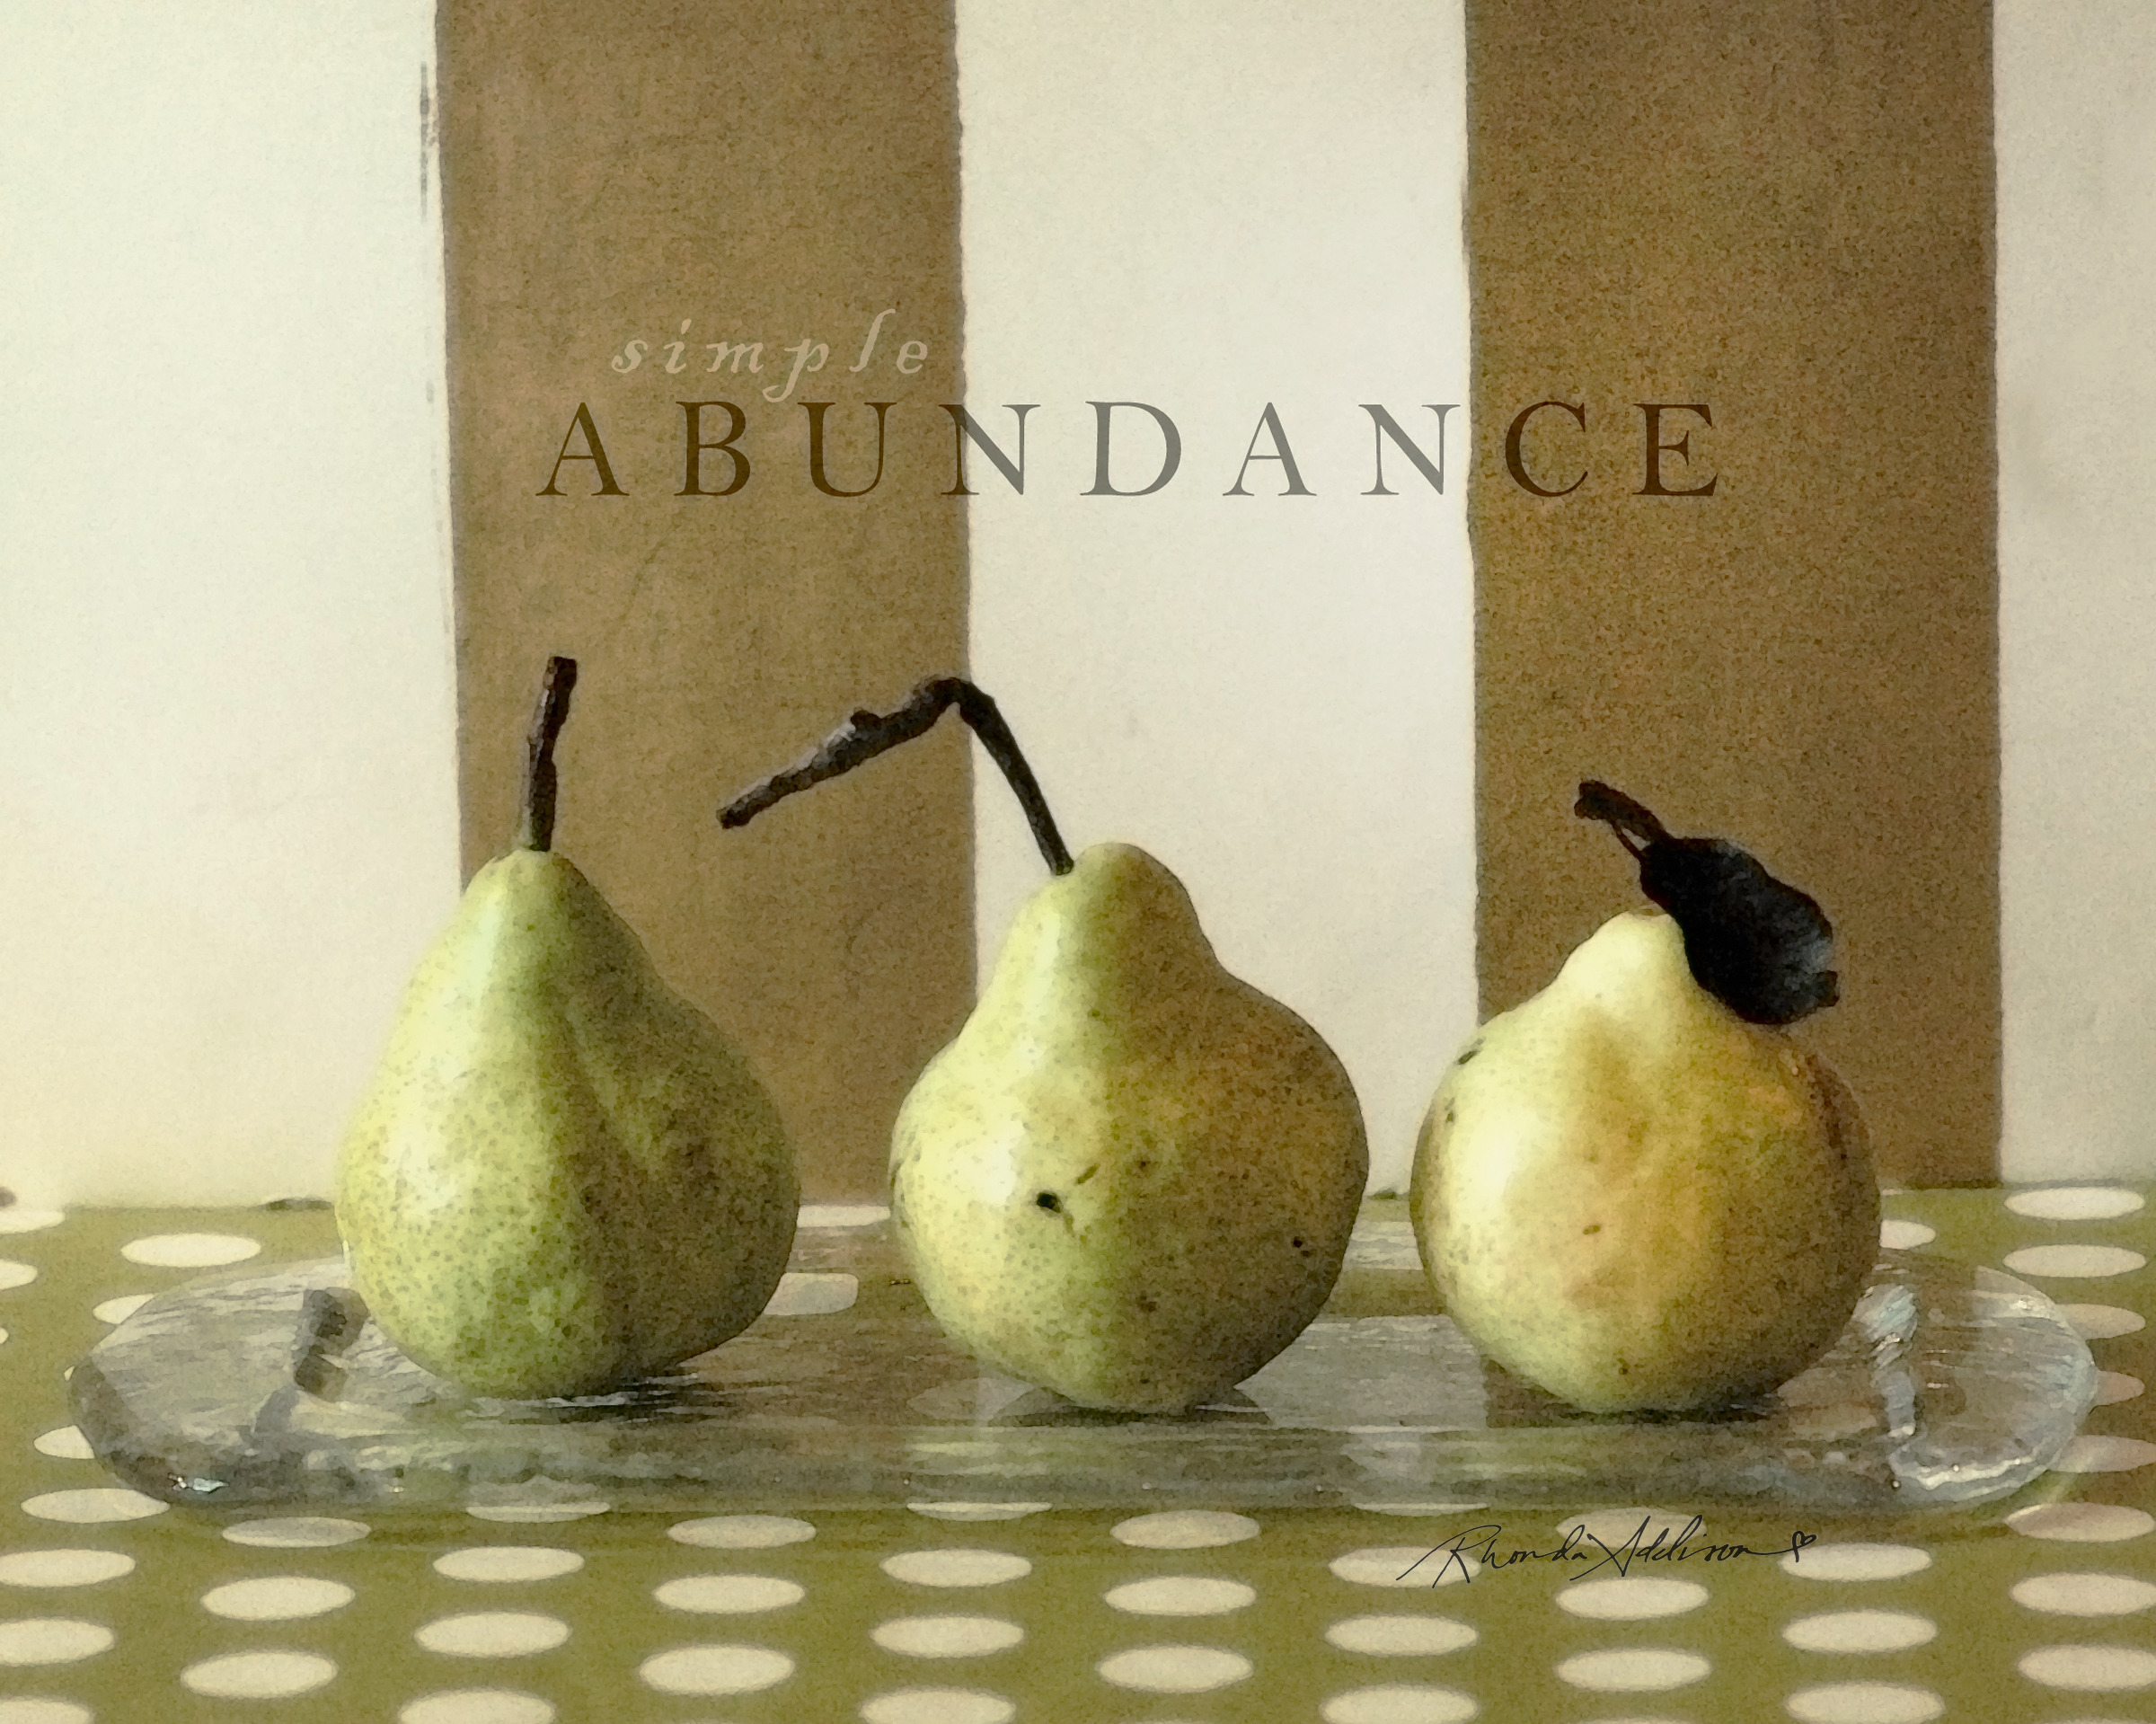 Pears 3 v s tudxsz